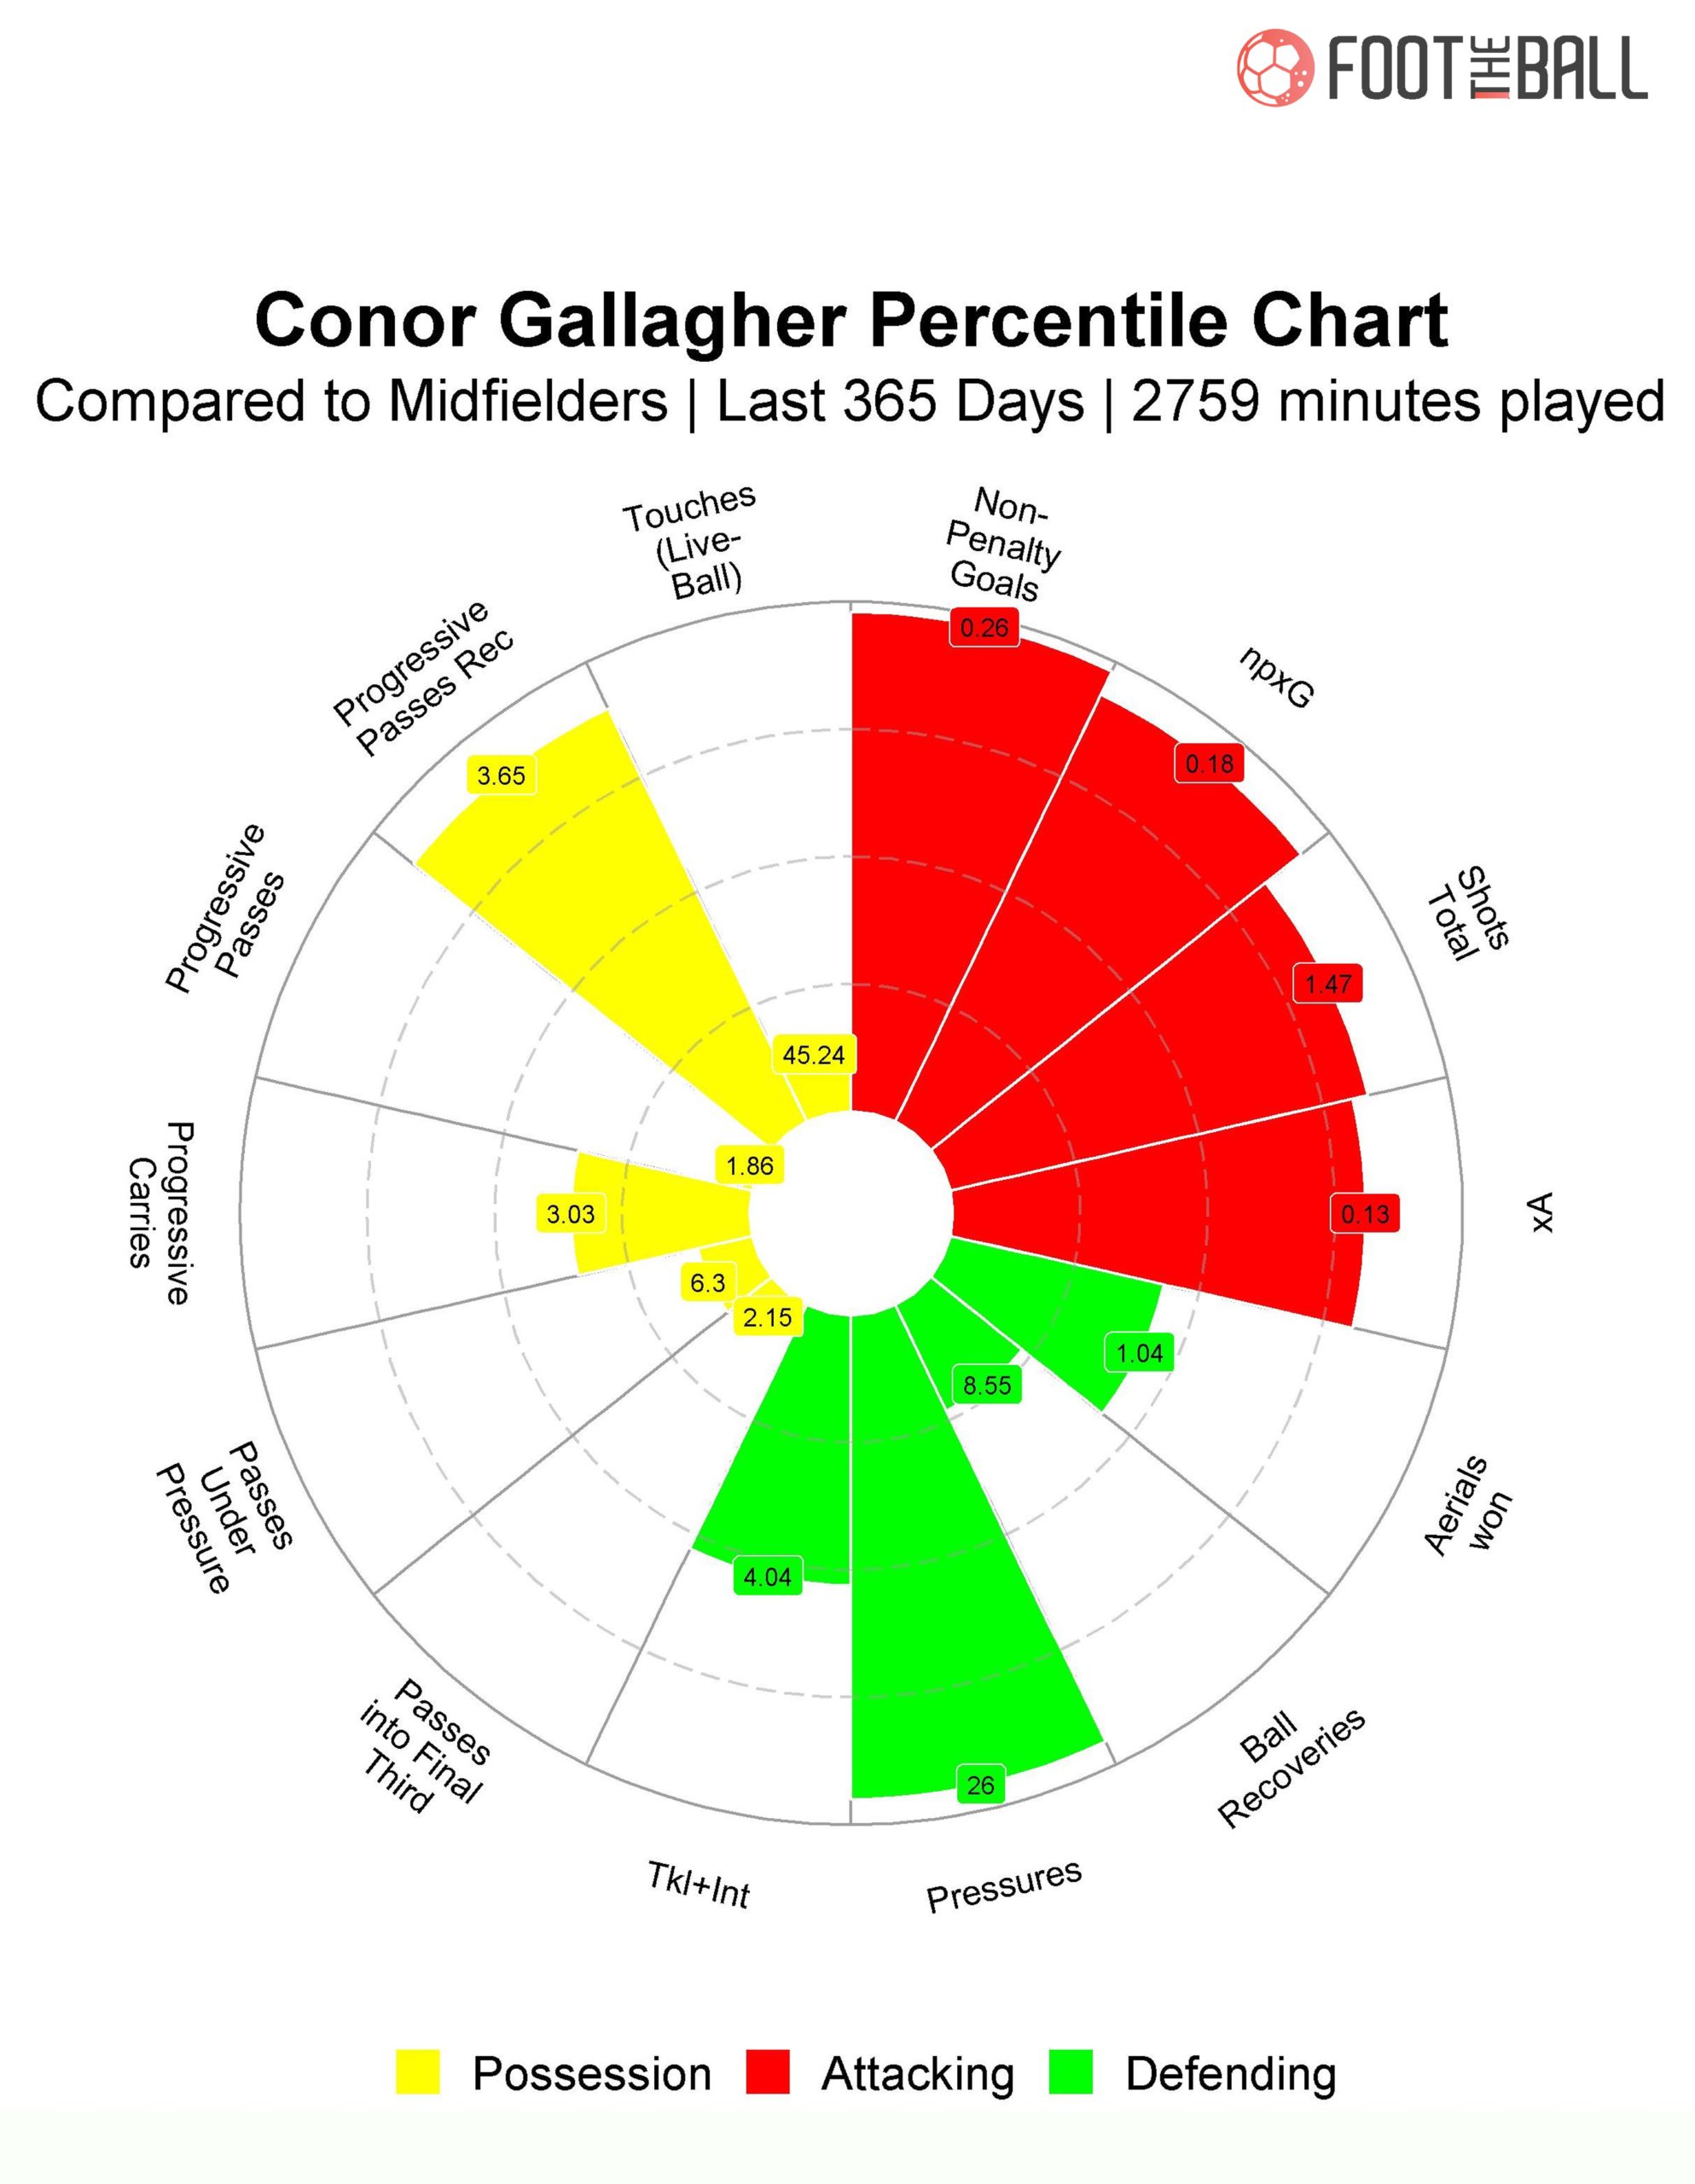 Connor Gallagher percentile chart